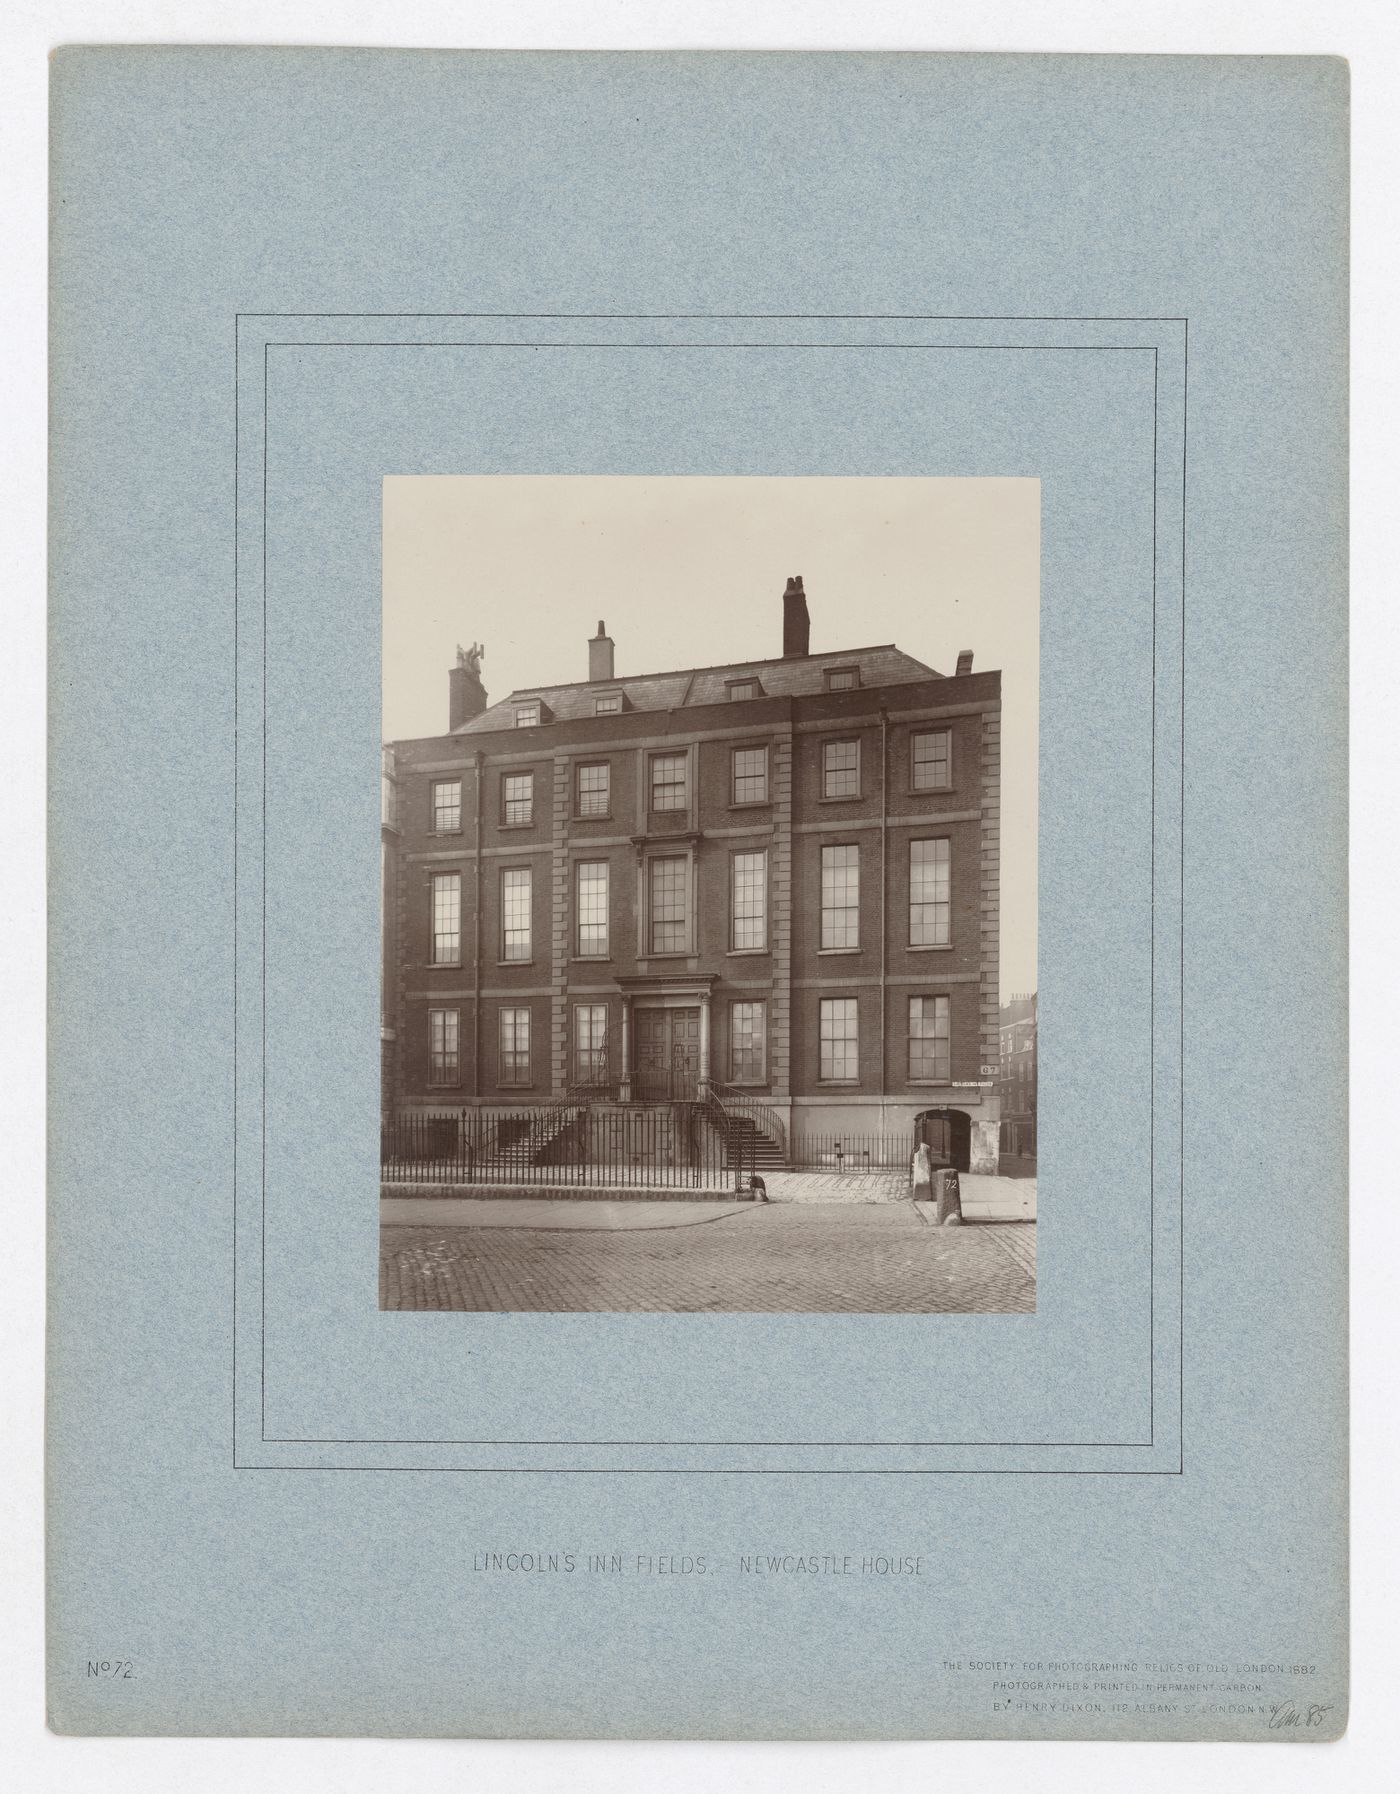 Lincoln's Inn Fields - Newcastle house